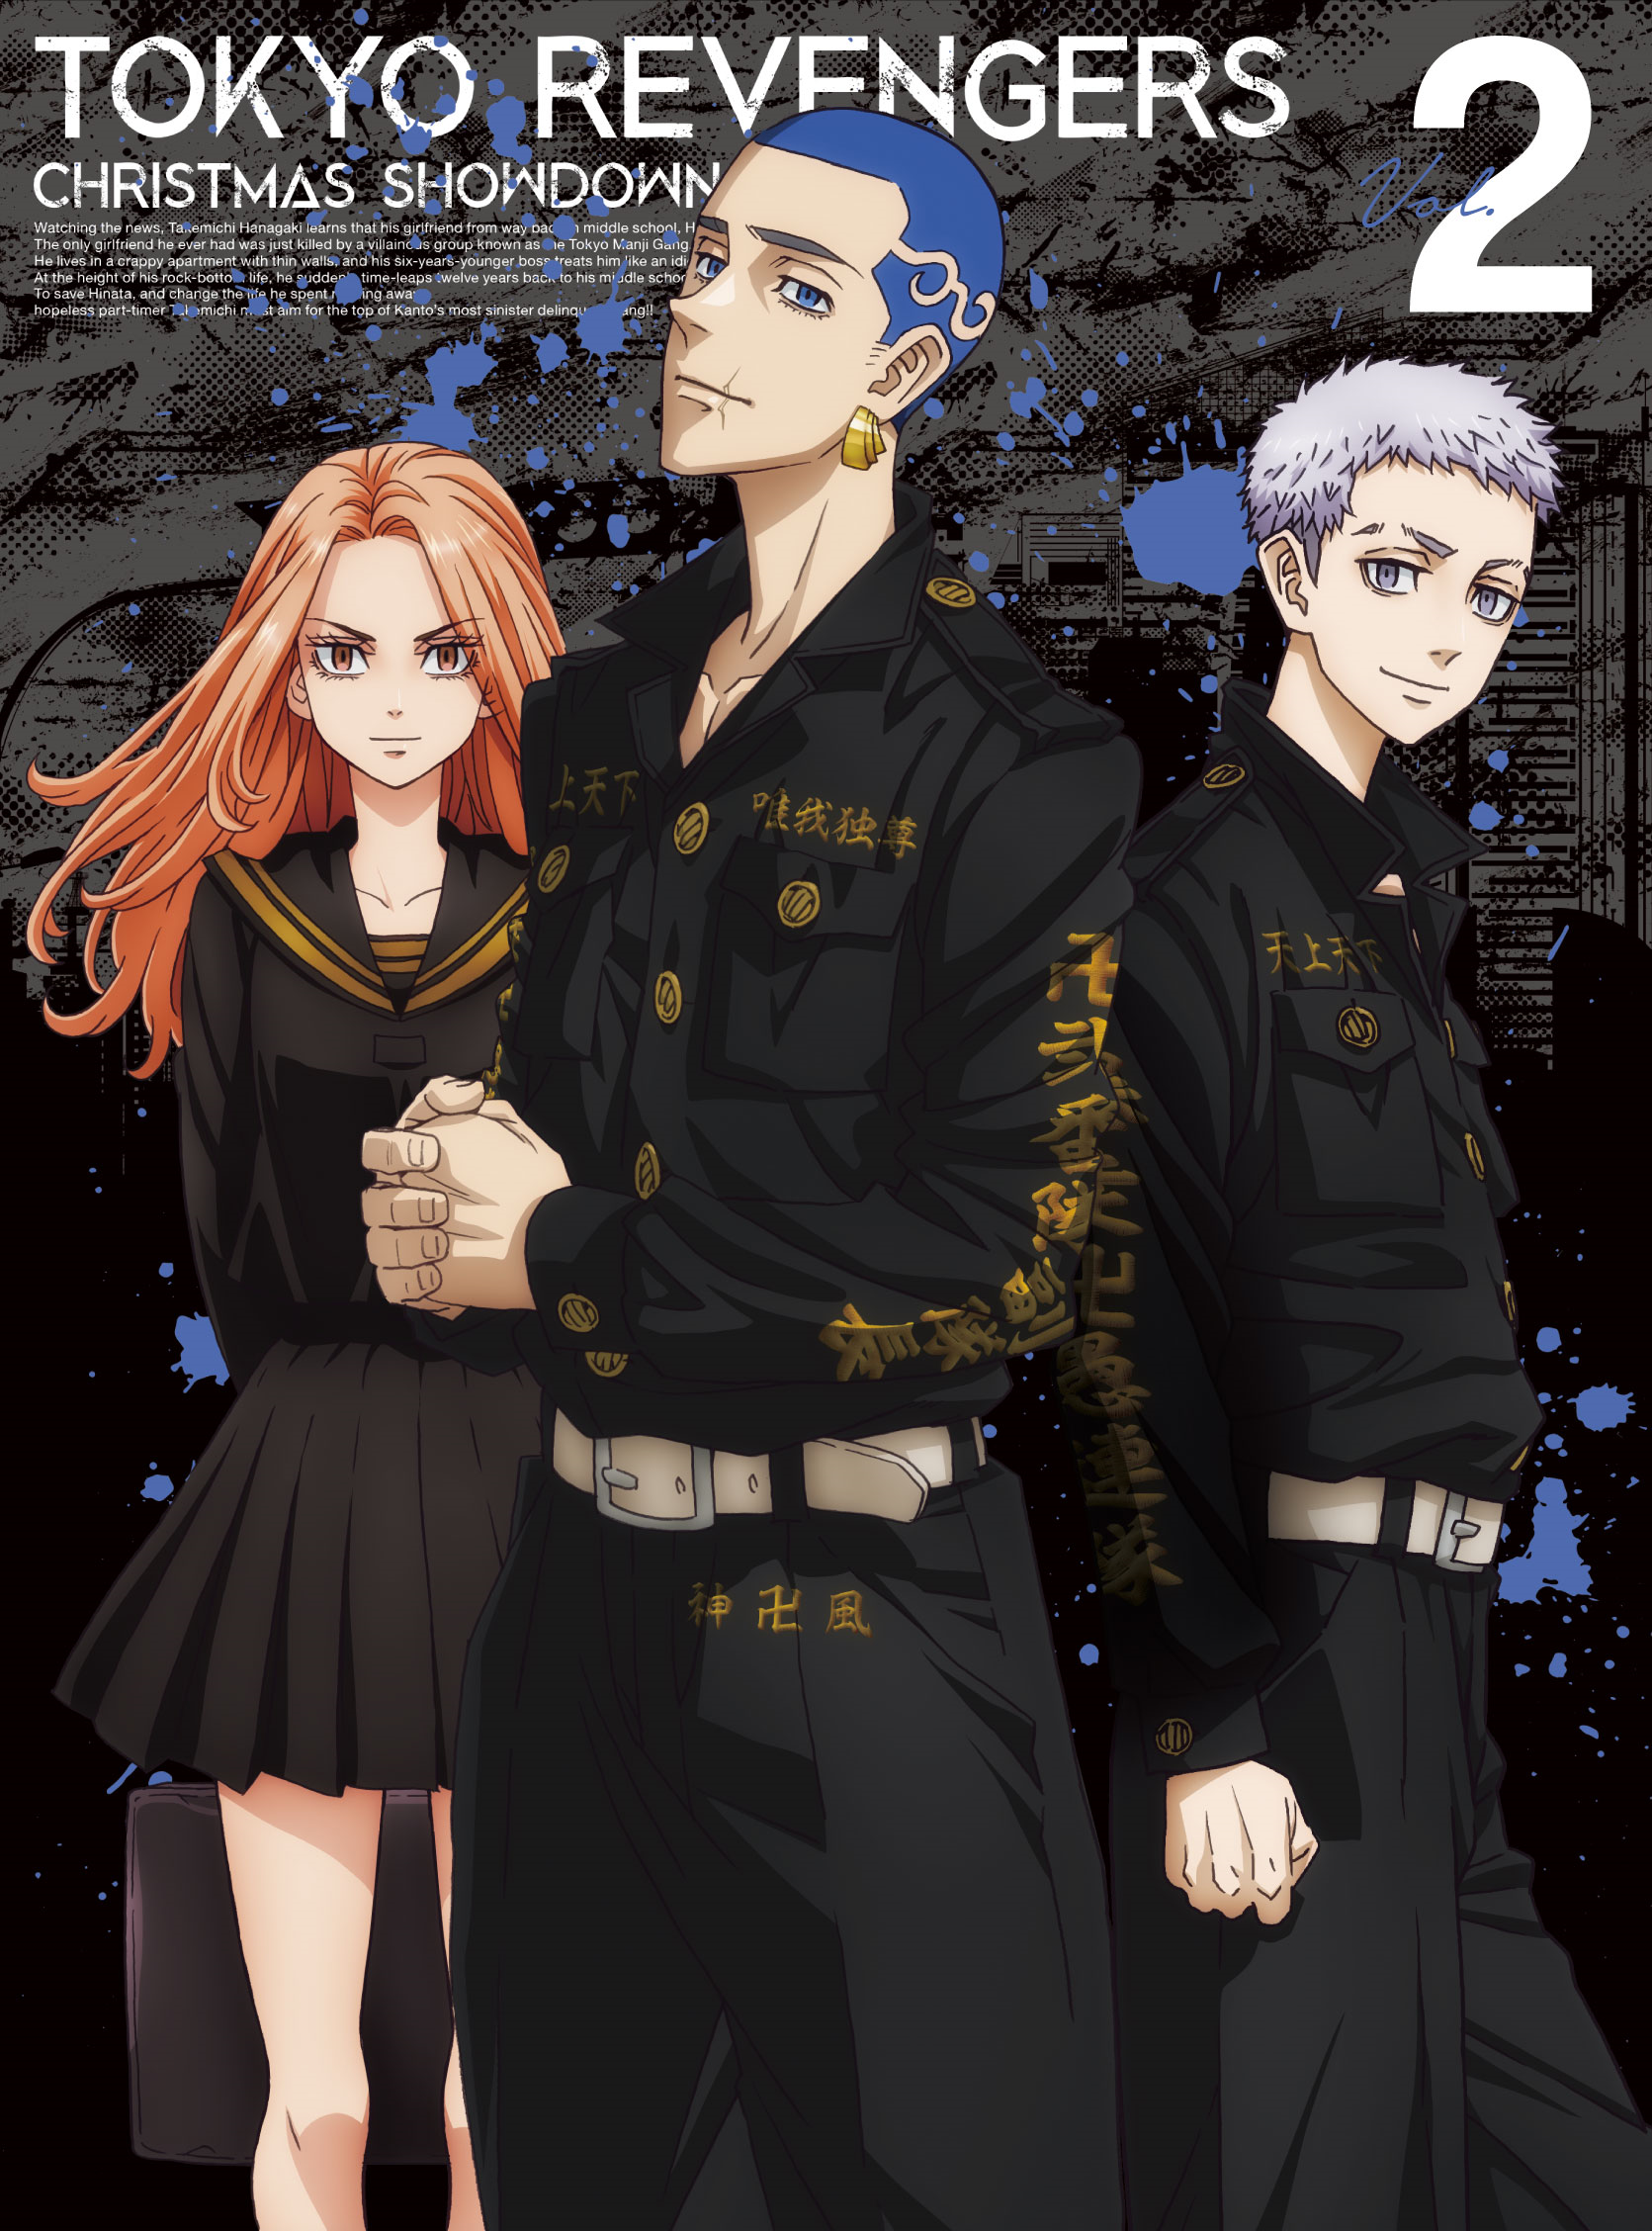 Poster Anime Tokyo Revengers Wall Scroll Home Collection Decor Otaku  60*90CM #21 | eBay